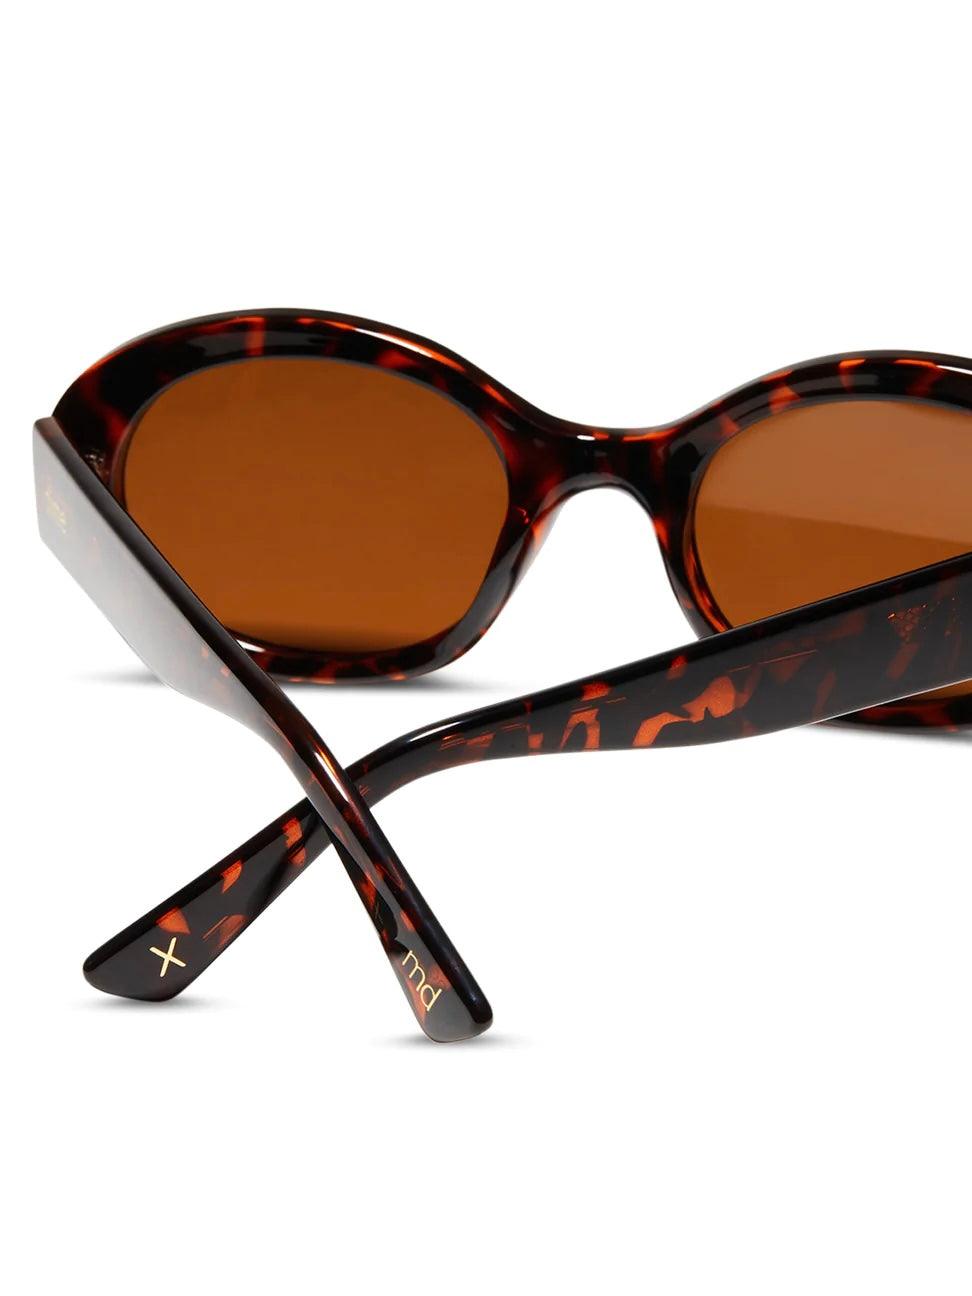 Duxbury Tortoise + Brown Sunglasses - Alden+Rose LLC 